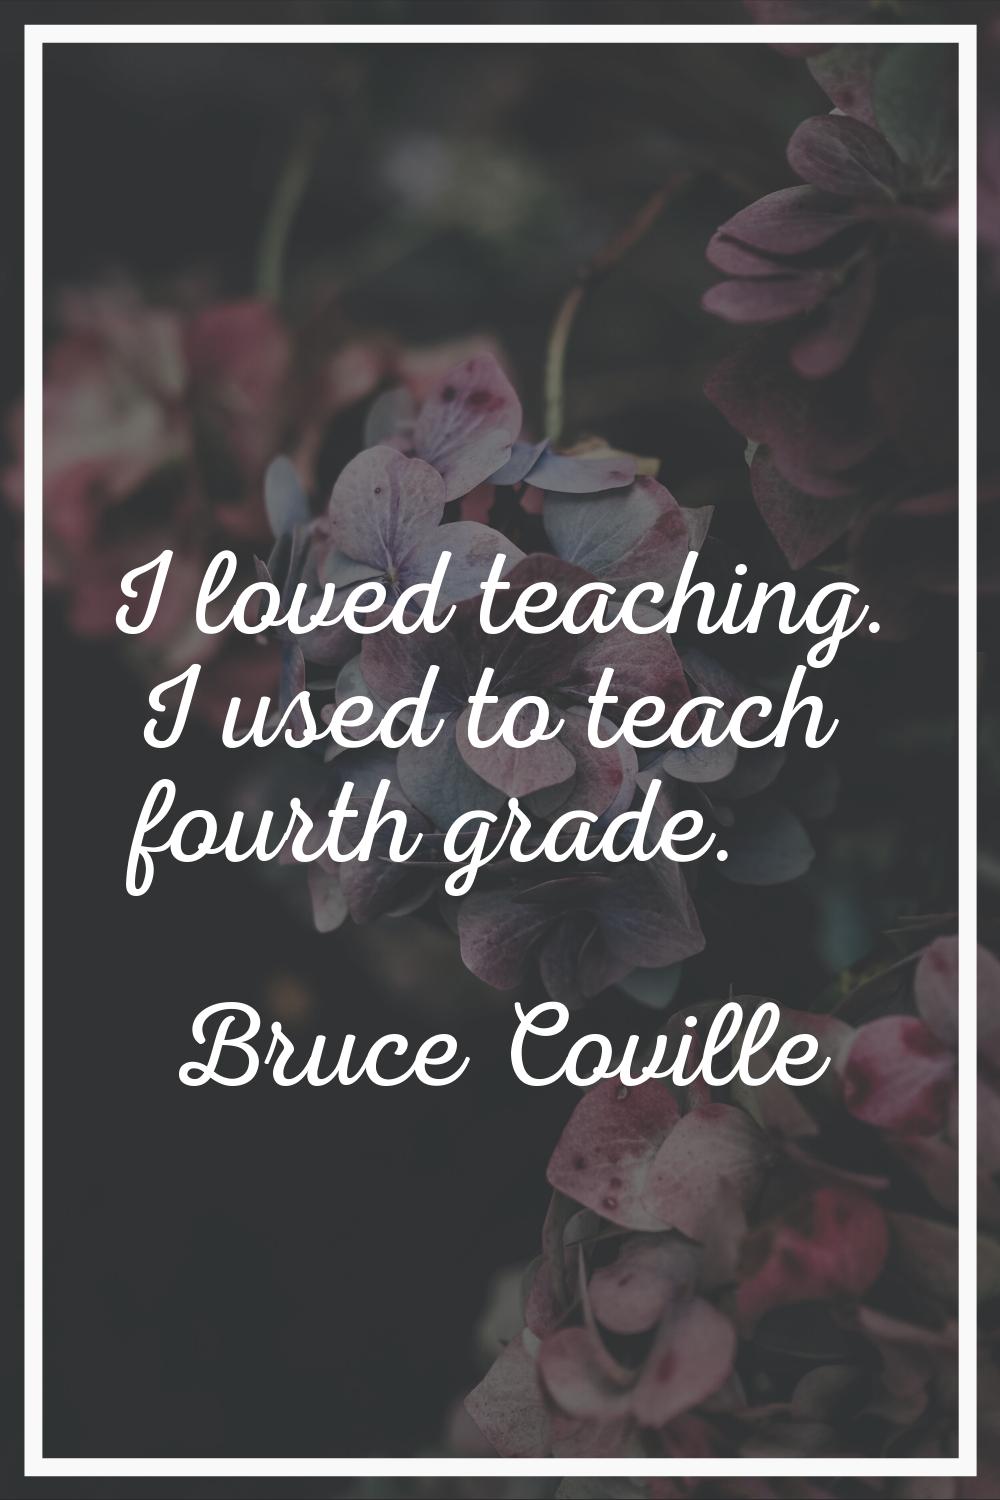 I loved teaching. I used to teach fourth grade.